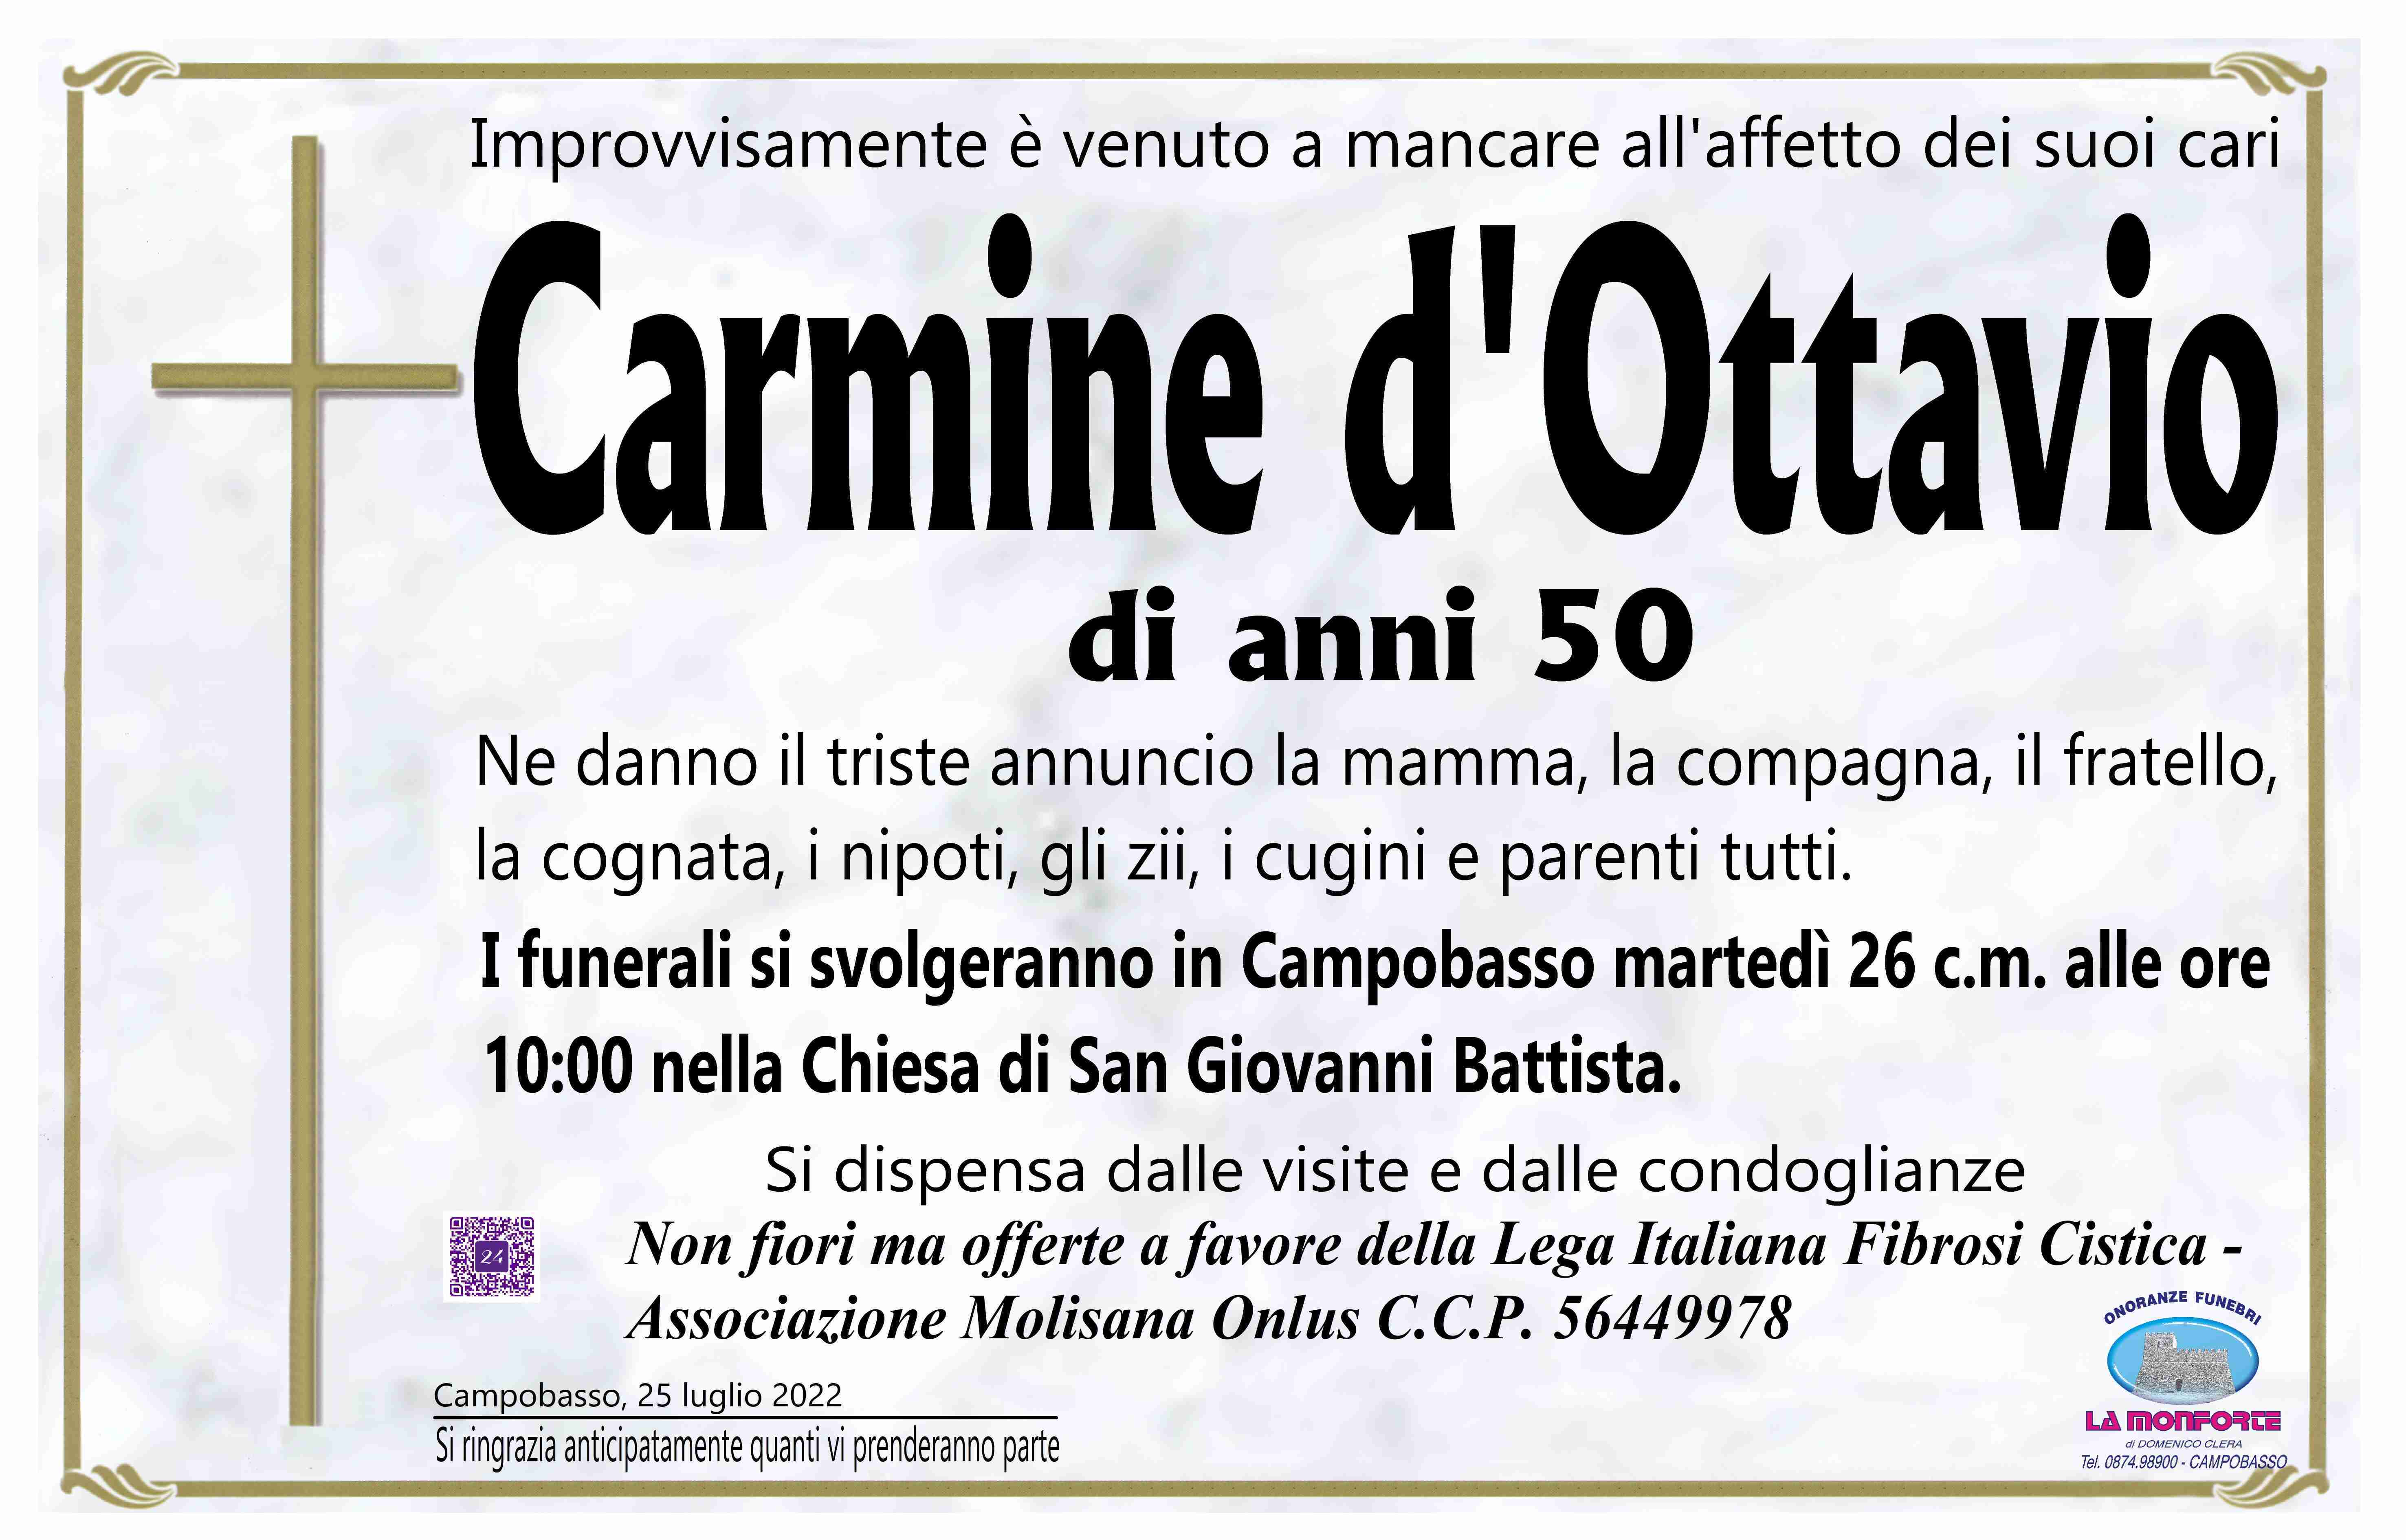 Carmine d'Ottavio